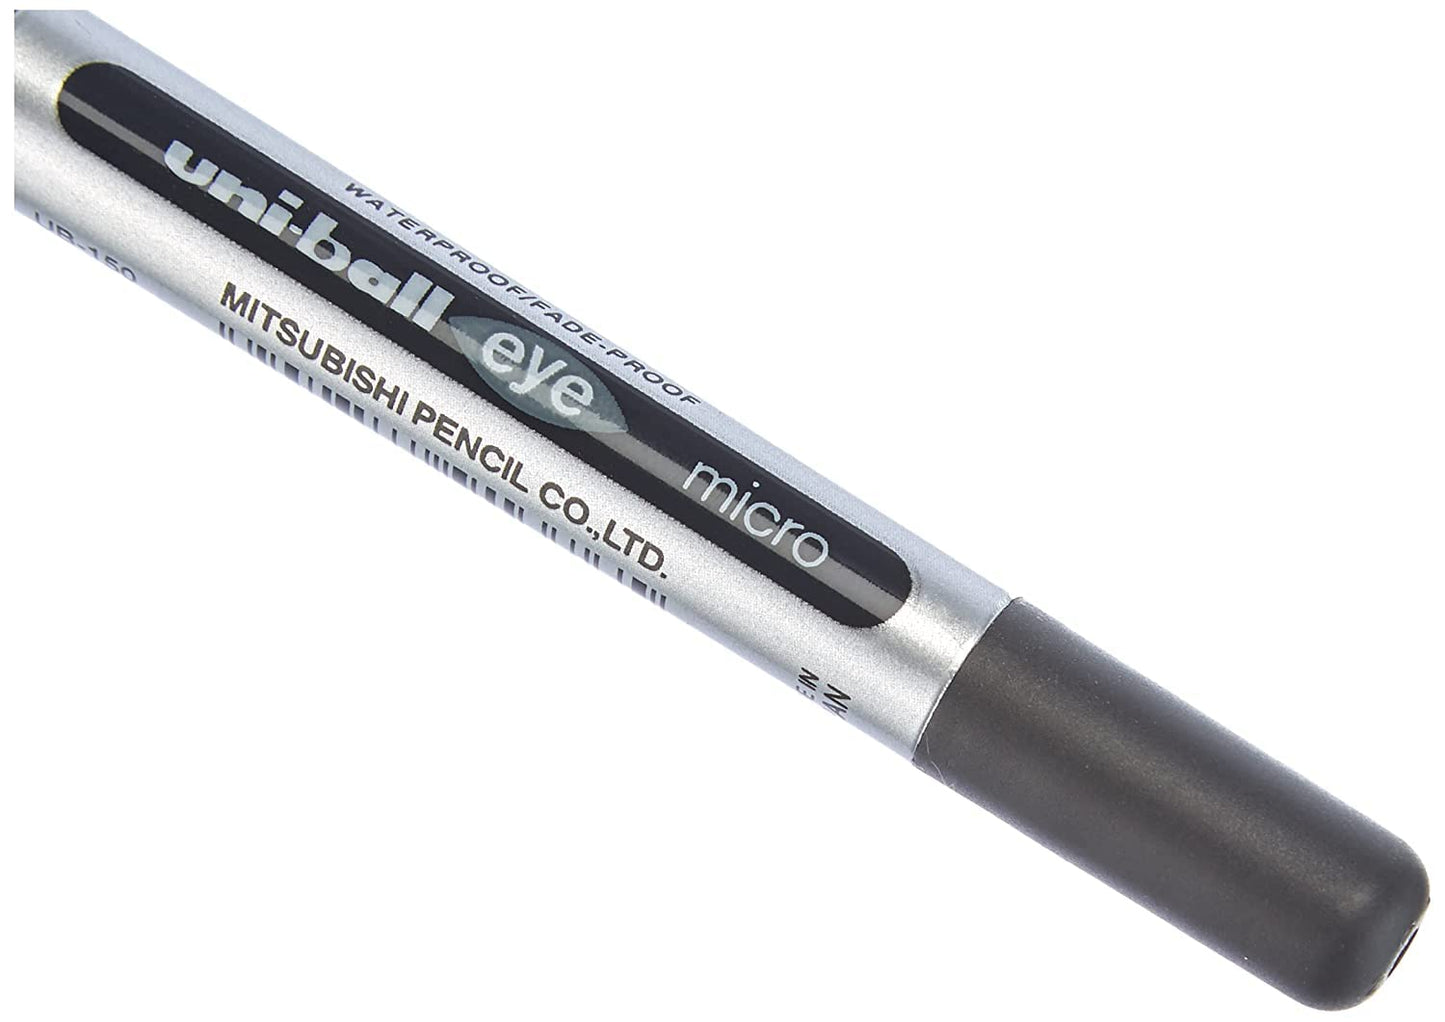 Mitsubishi Ub150 0.5mm Ball Width, 0.3mm Line Width Uni-Ball Eye Liquid Ink Rollerball Pen